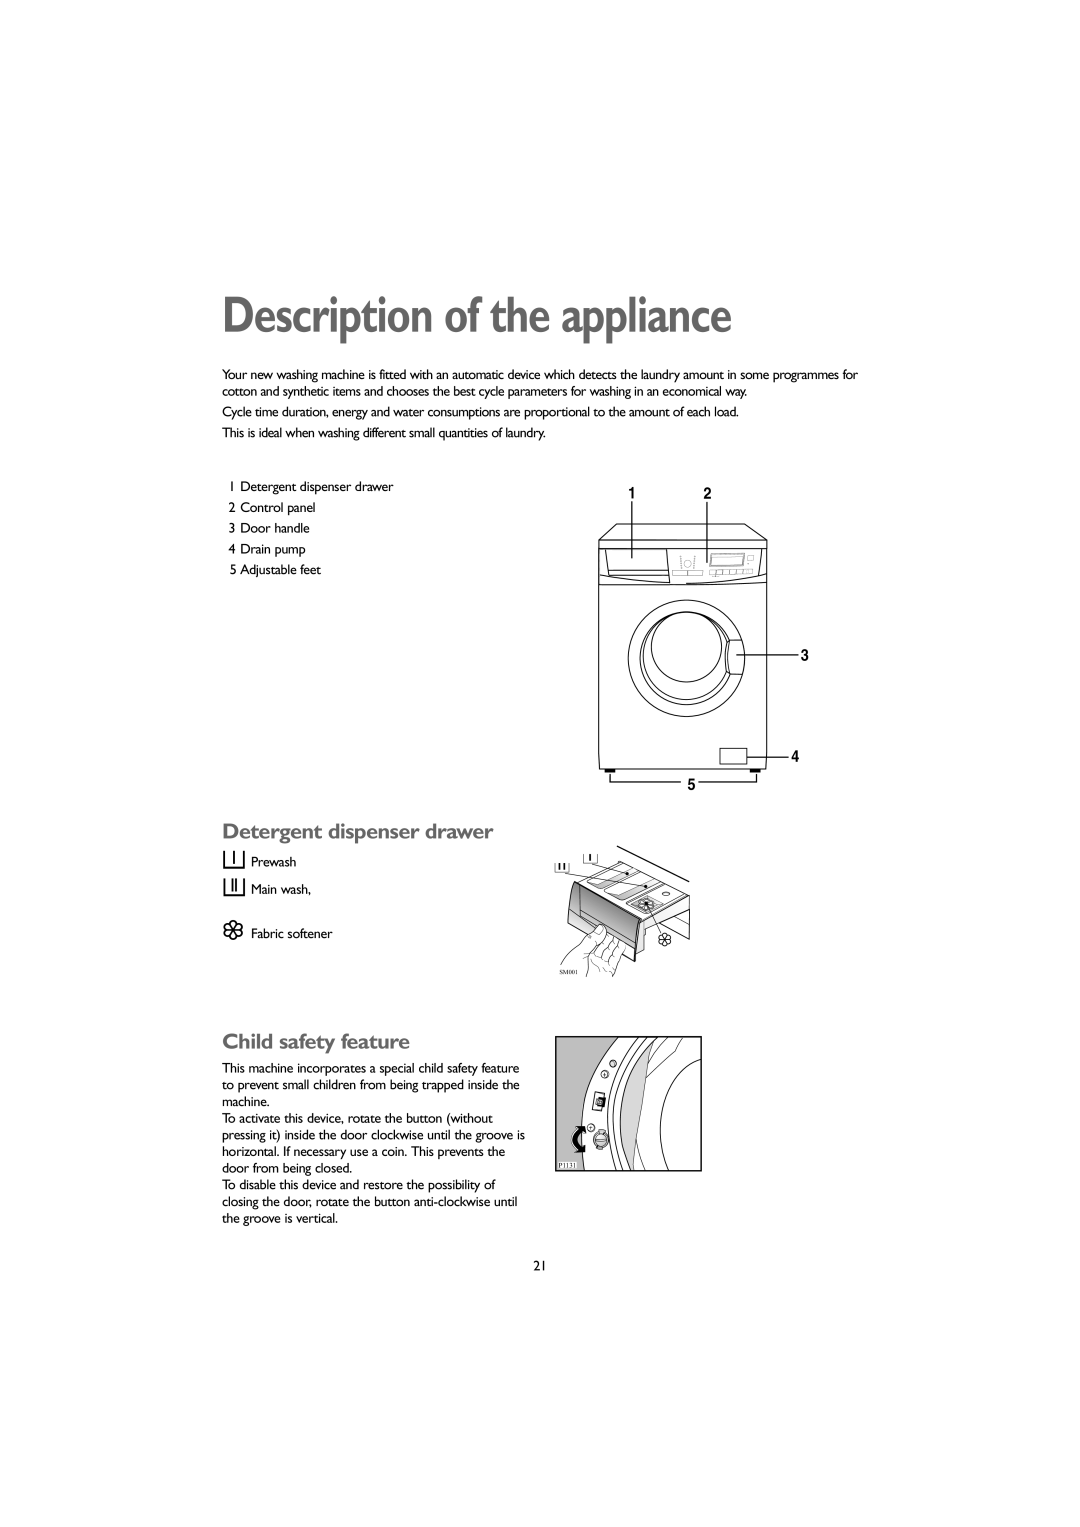 John Lewis JLWM 1406 instruction manual Description of the appliance, Detergent dispenser drawer, Child safety feature 